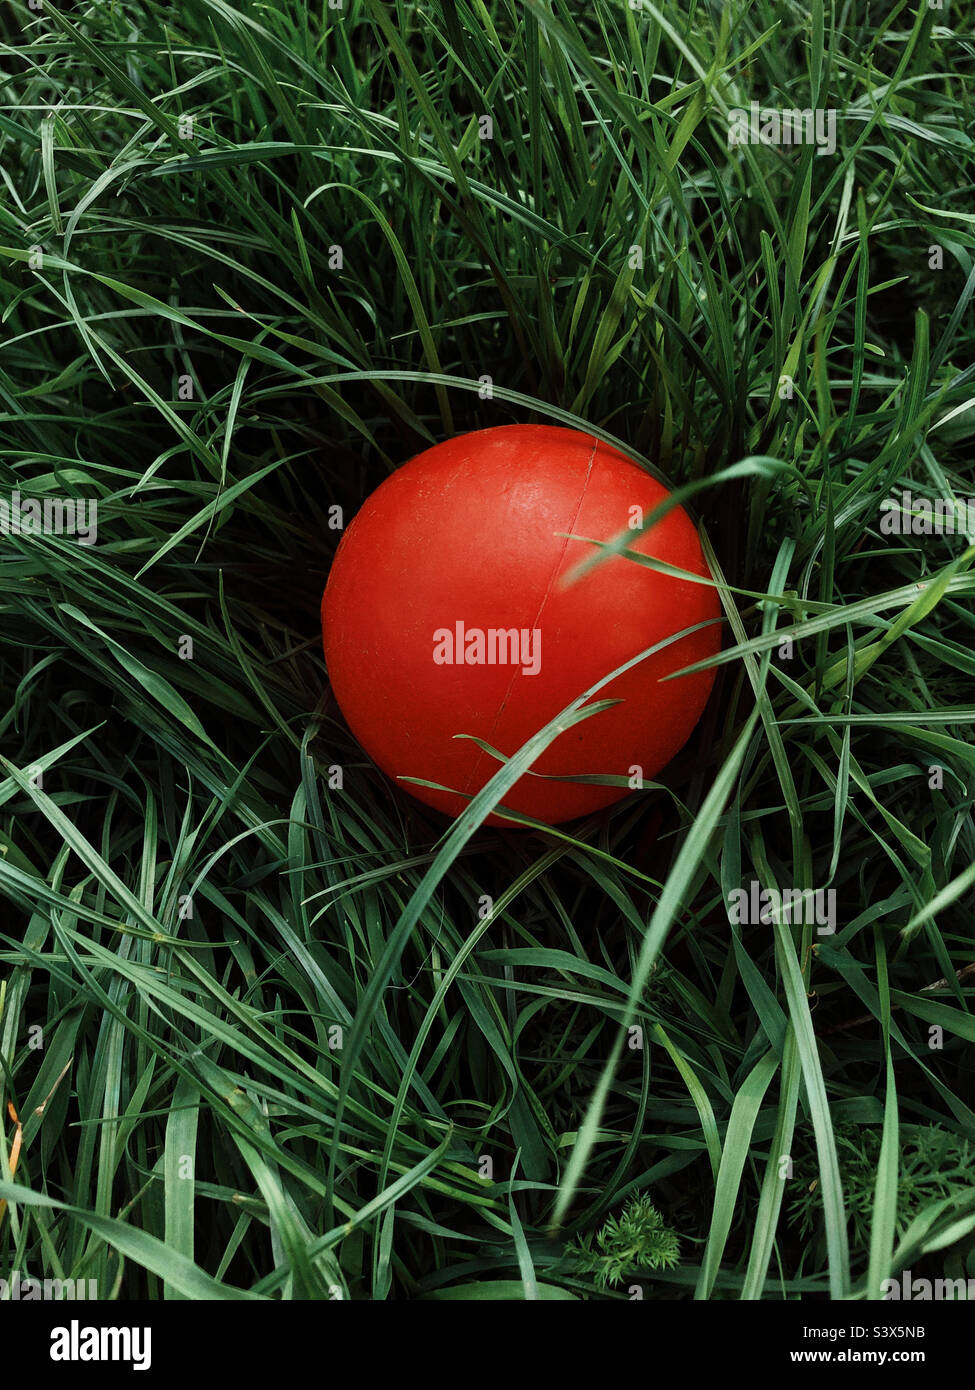 Red plastic ball among green grass Stock Photo